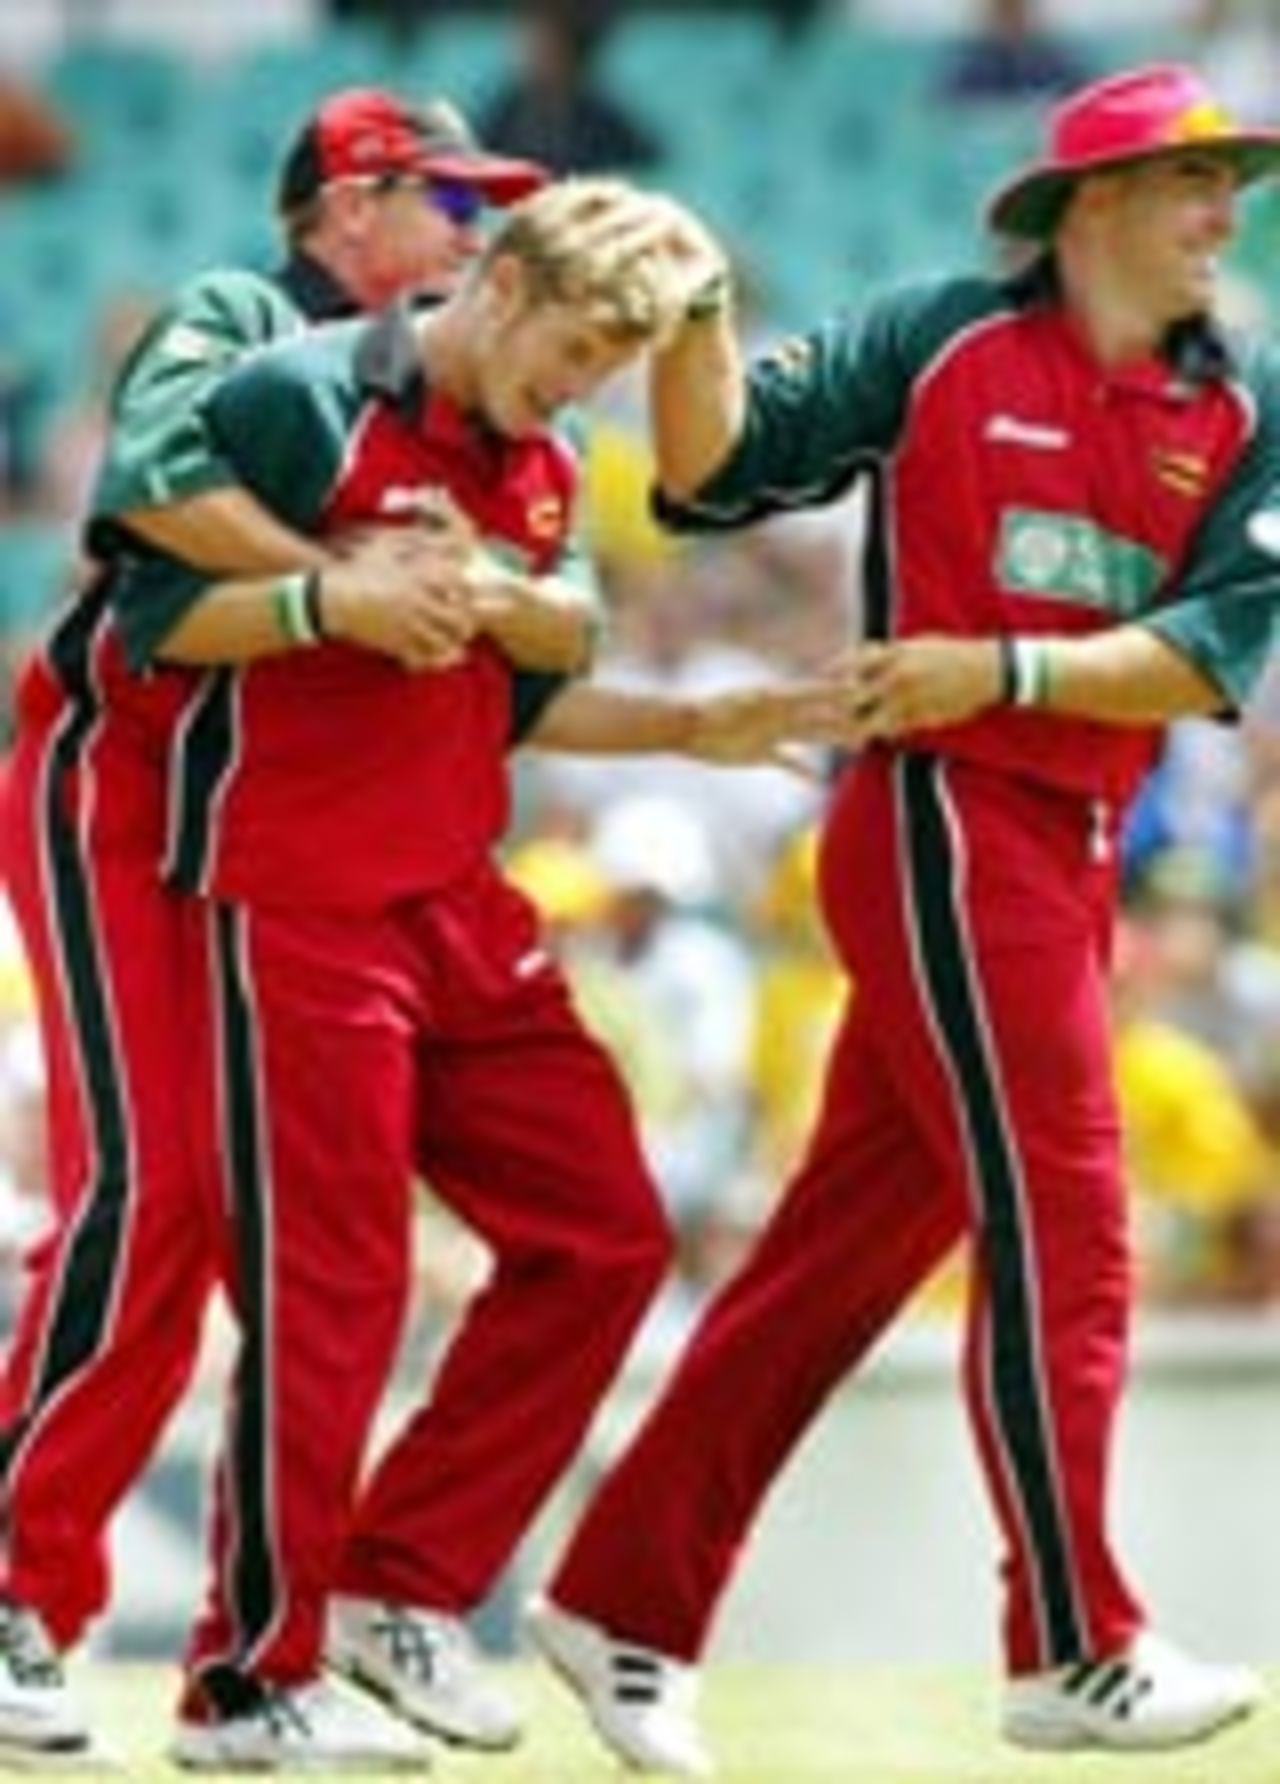 Andy Blignaut congratulated by Ray Price and Heath Streak, Australia v Zimbabwe, VB Series, Sydney, January 11, 2004